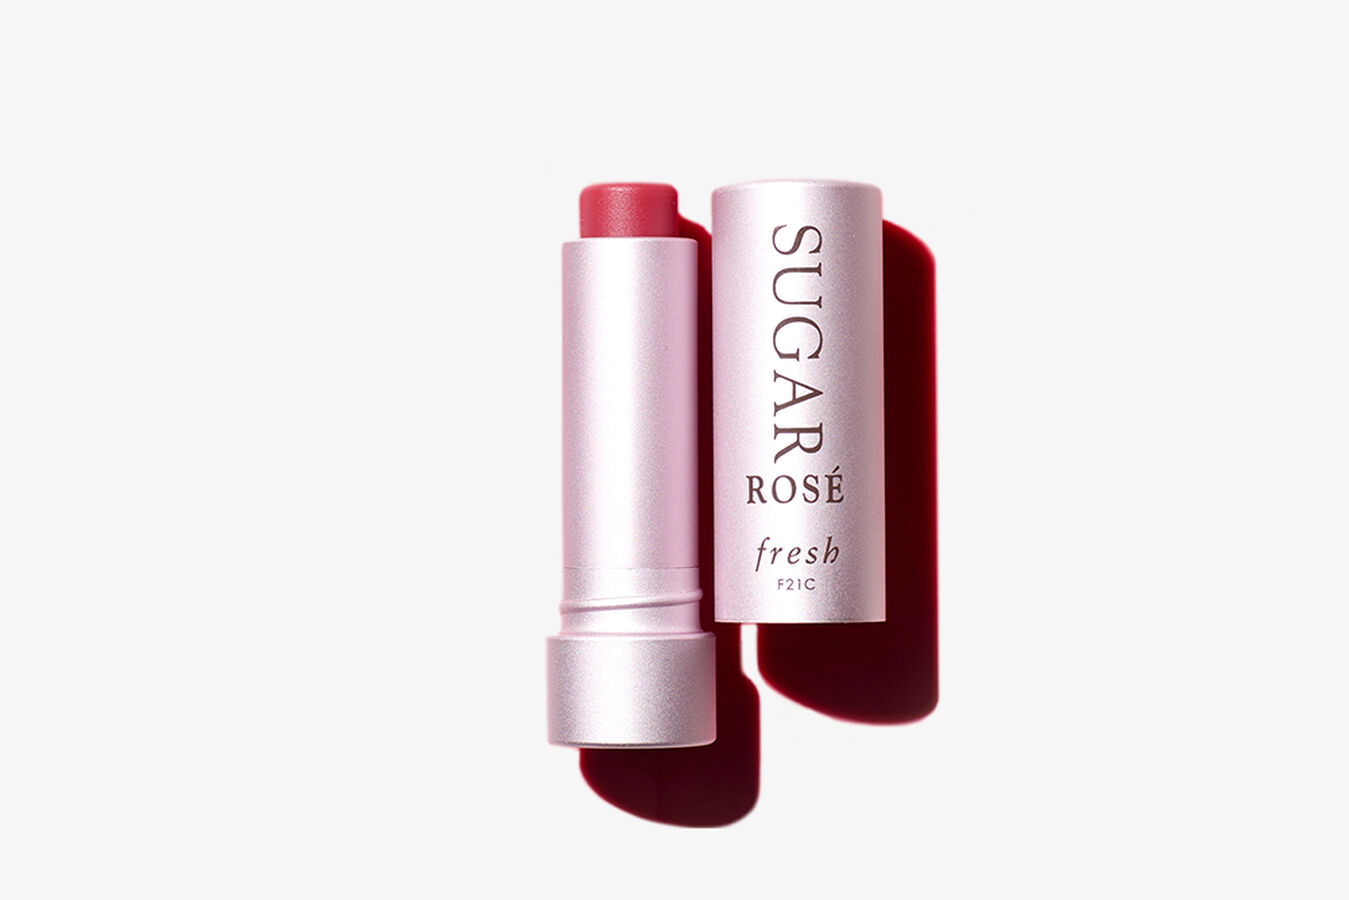 Sugar Rosé Tinted Lip Treatment Sunscreen SPF 15